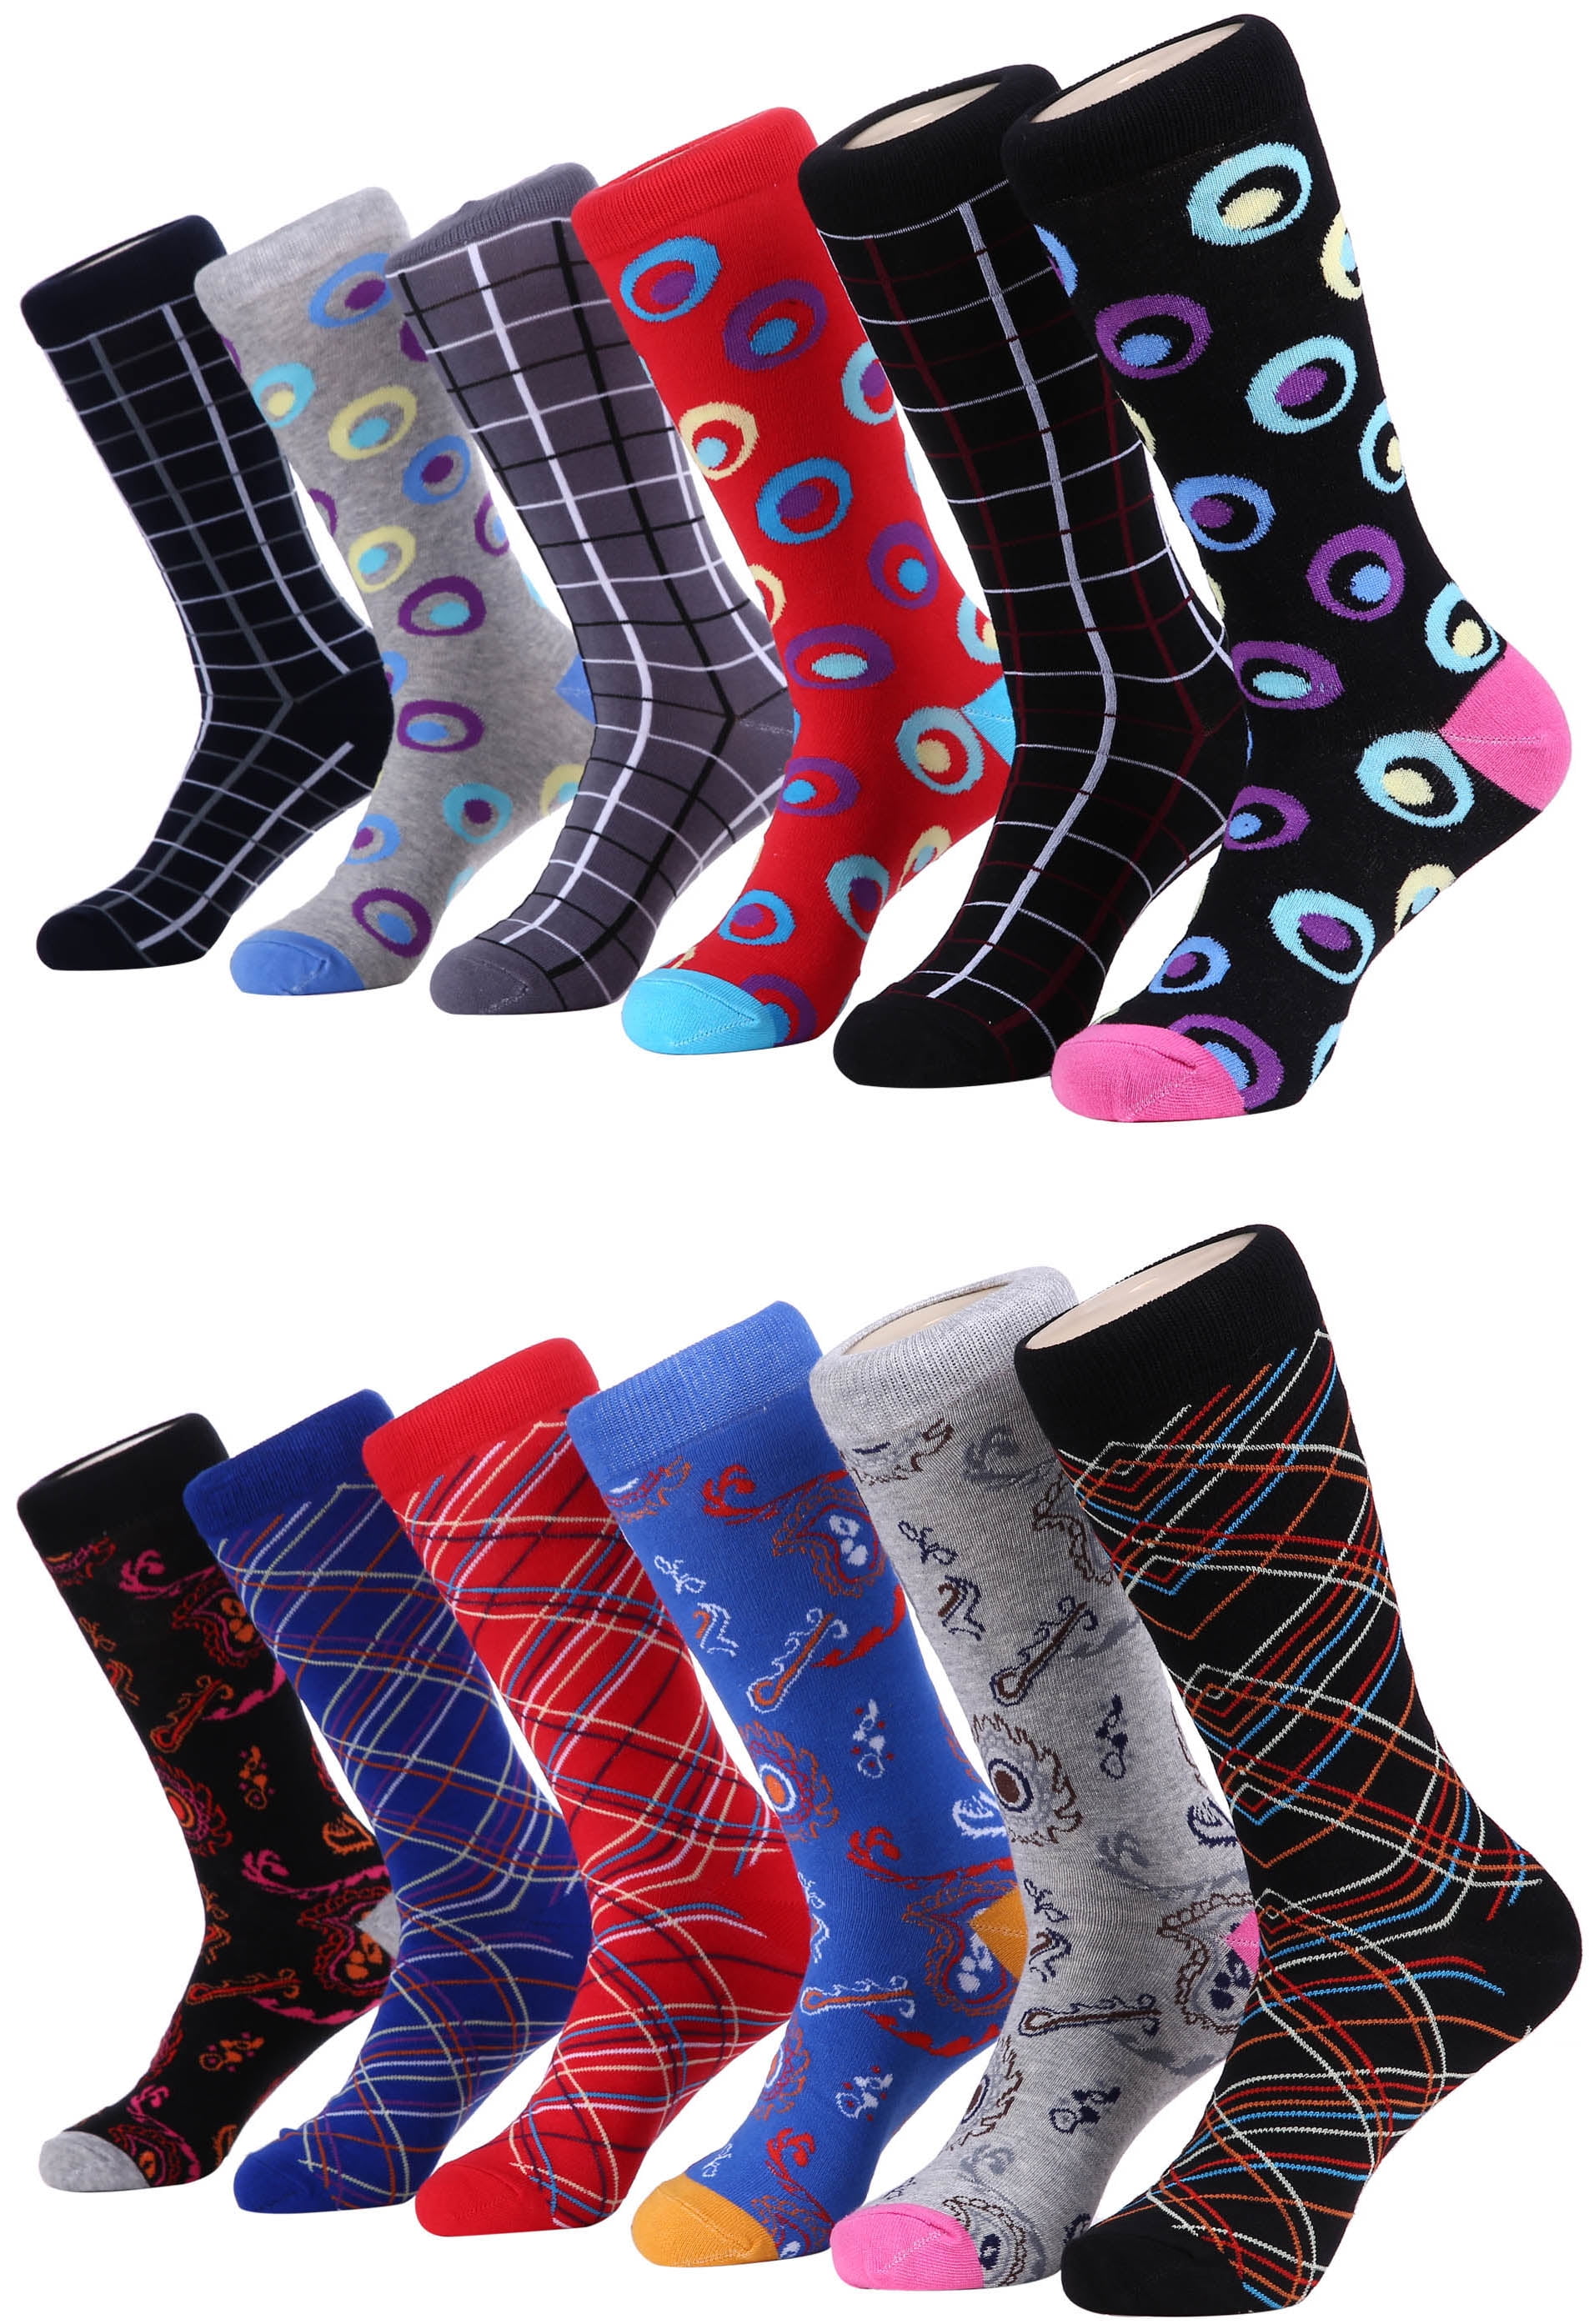 Mens Fun Dress Socks Patterned Crew Colorful Funky Fancy Novelty Funny Casual Socks for Men